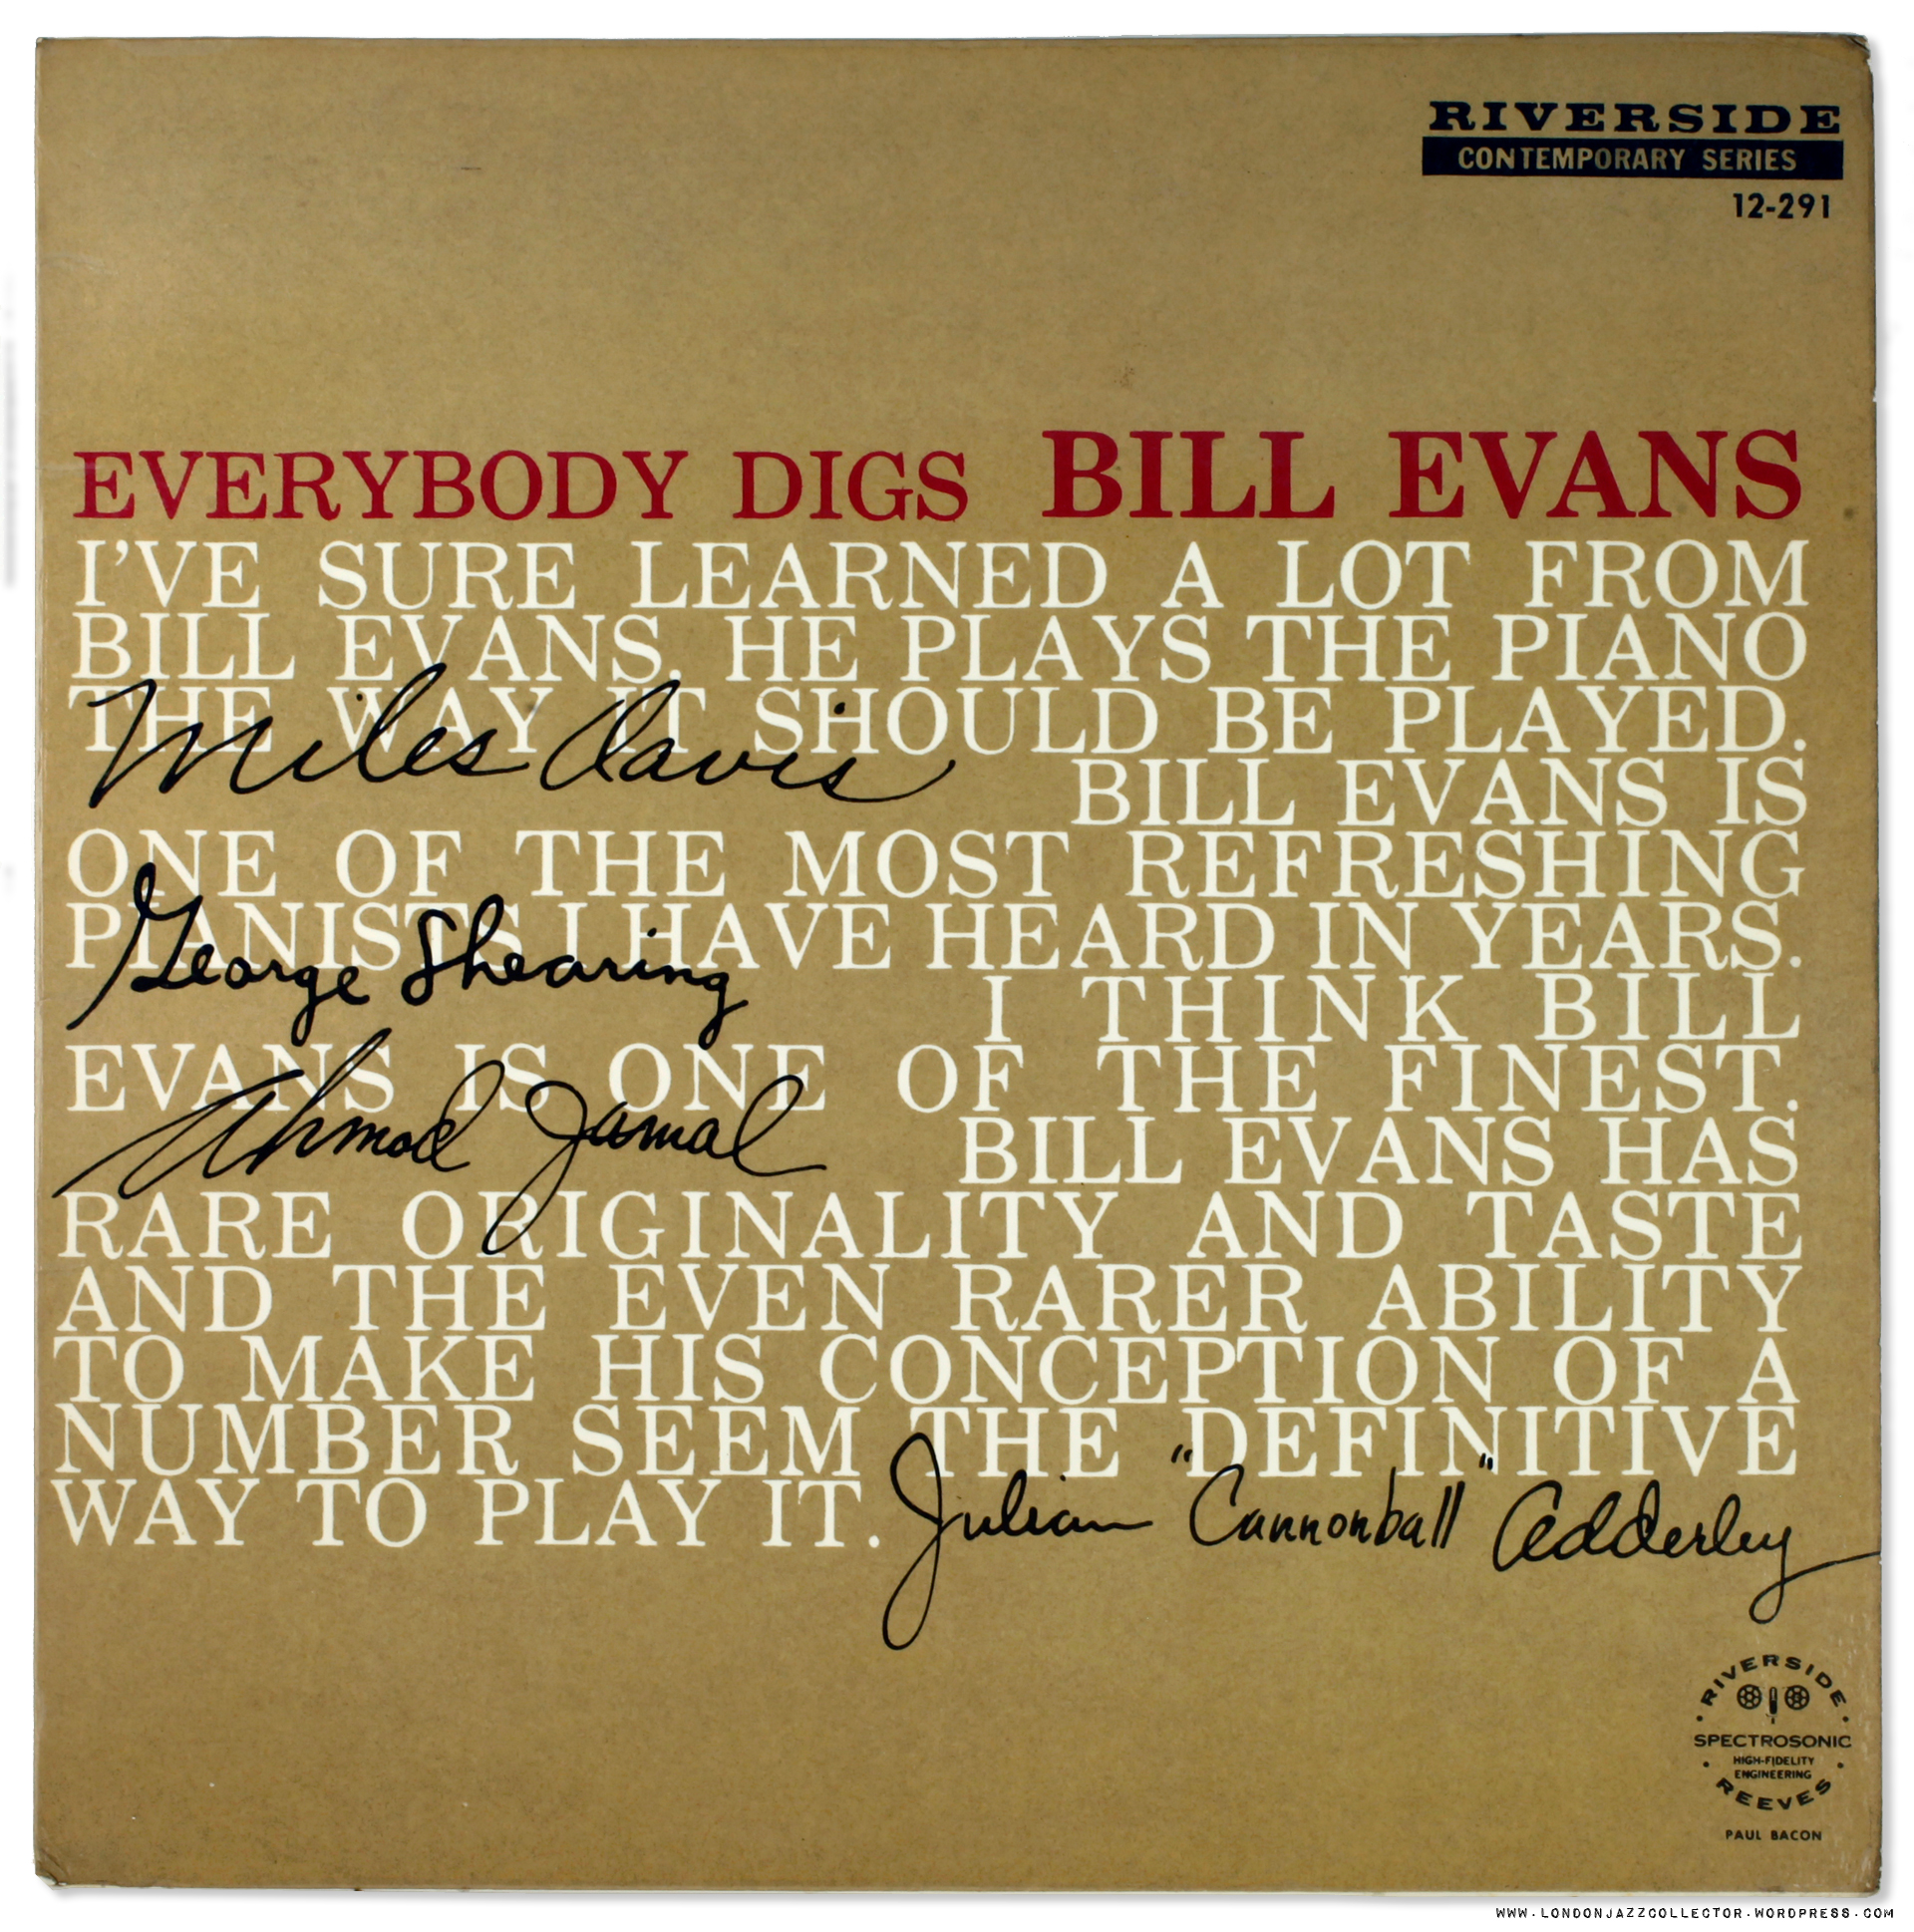 Bill Evans “Everybody Digs Bill Evans” (1958) | LondonJazzCollector